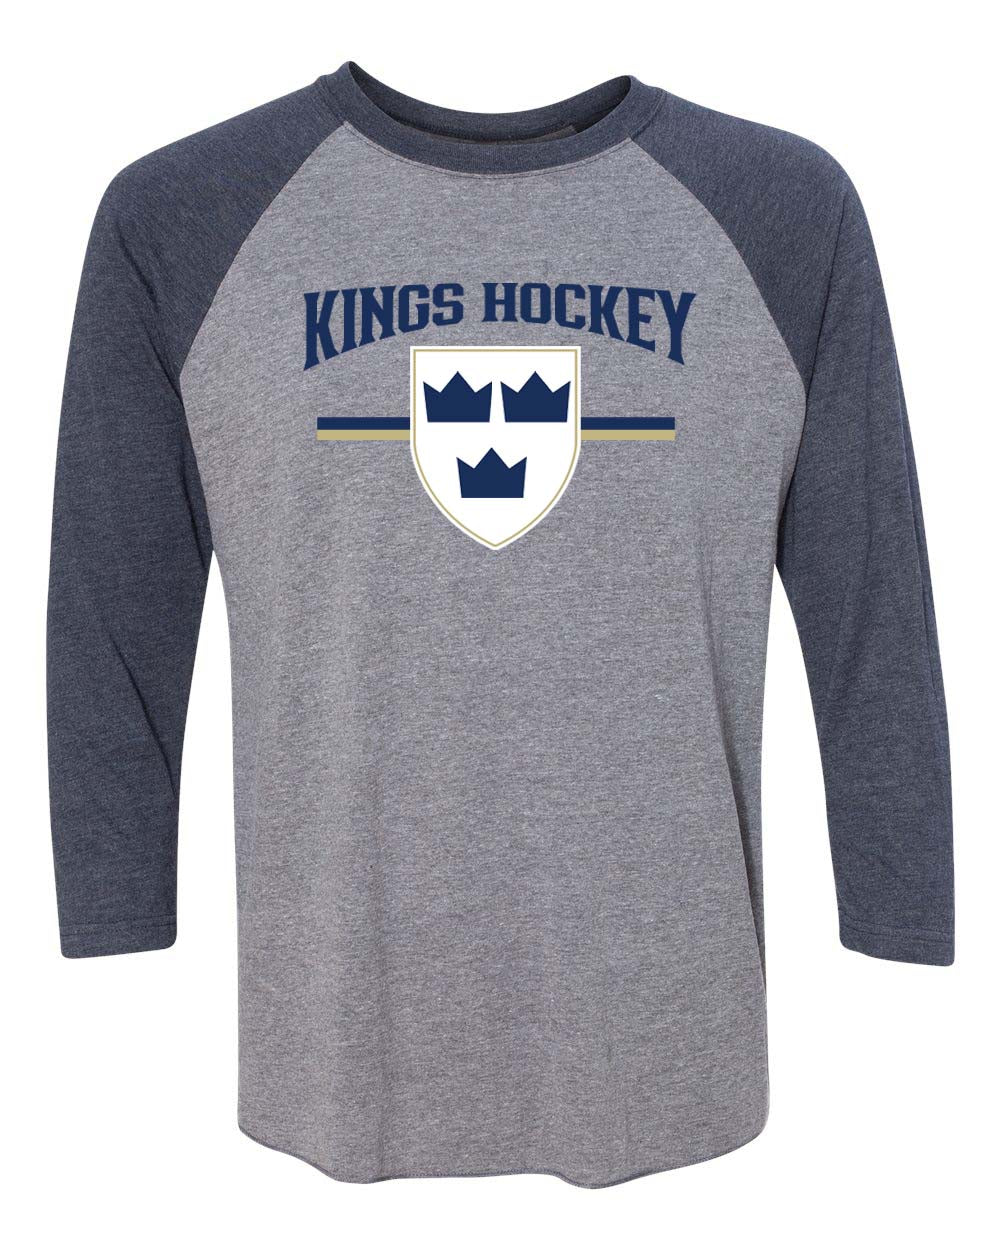 Kings Hockey Design 5 raglan shirt